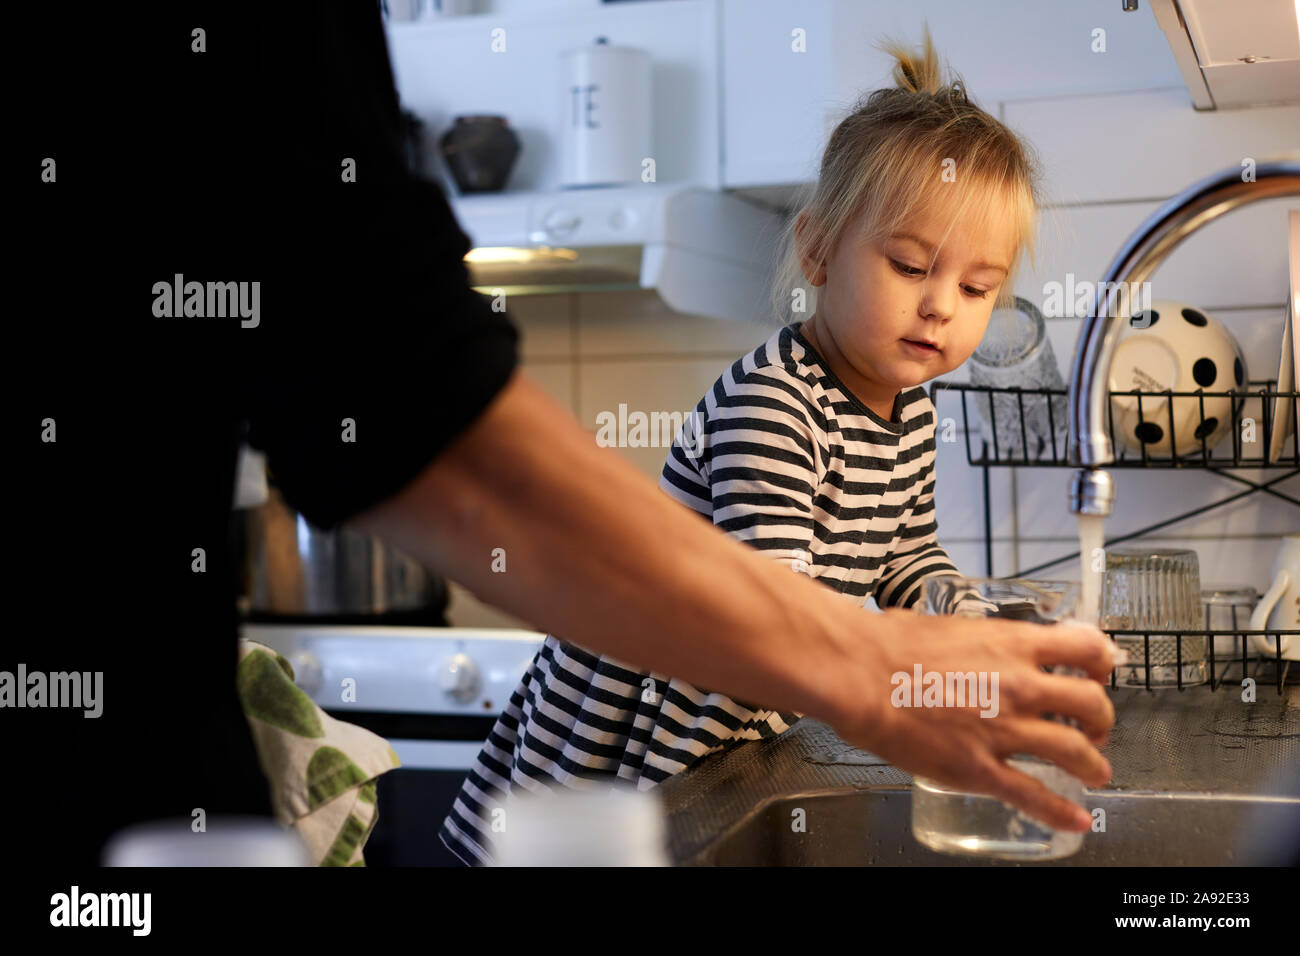 Girl in kitchen Stock Photo